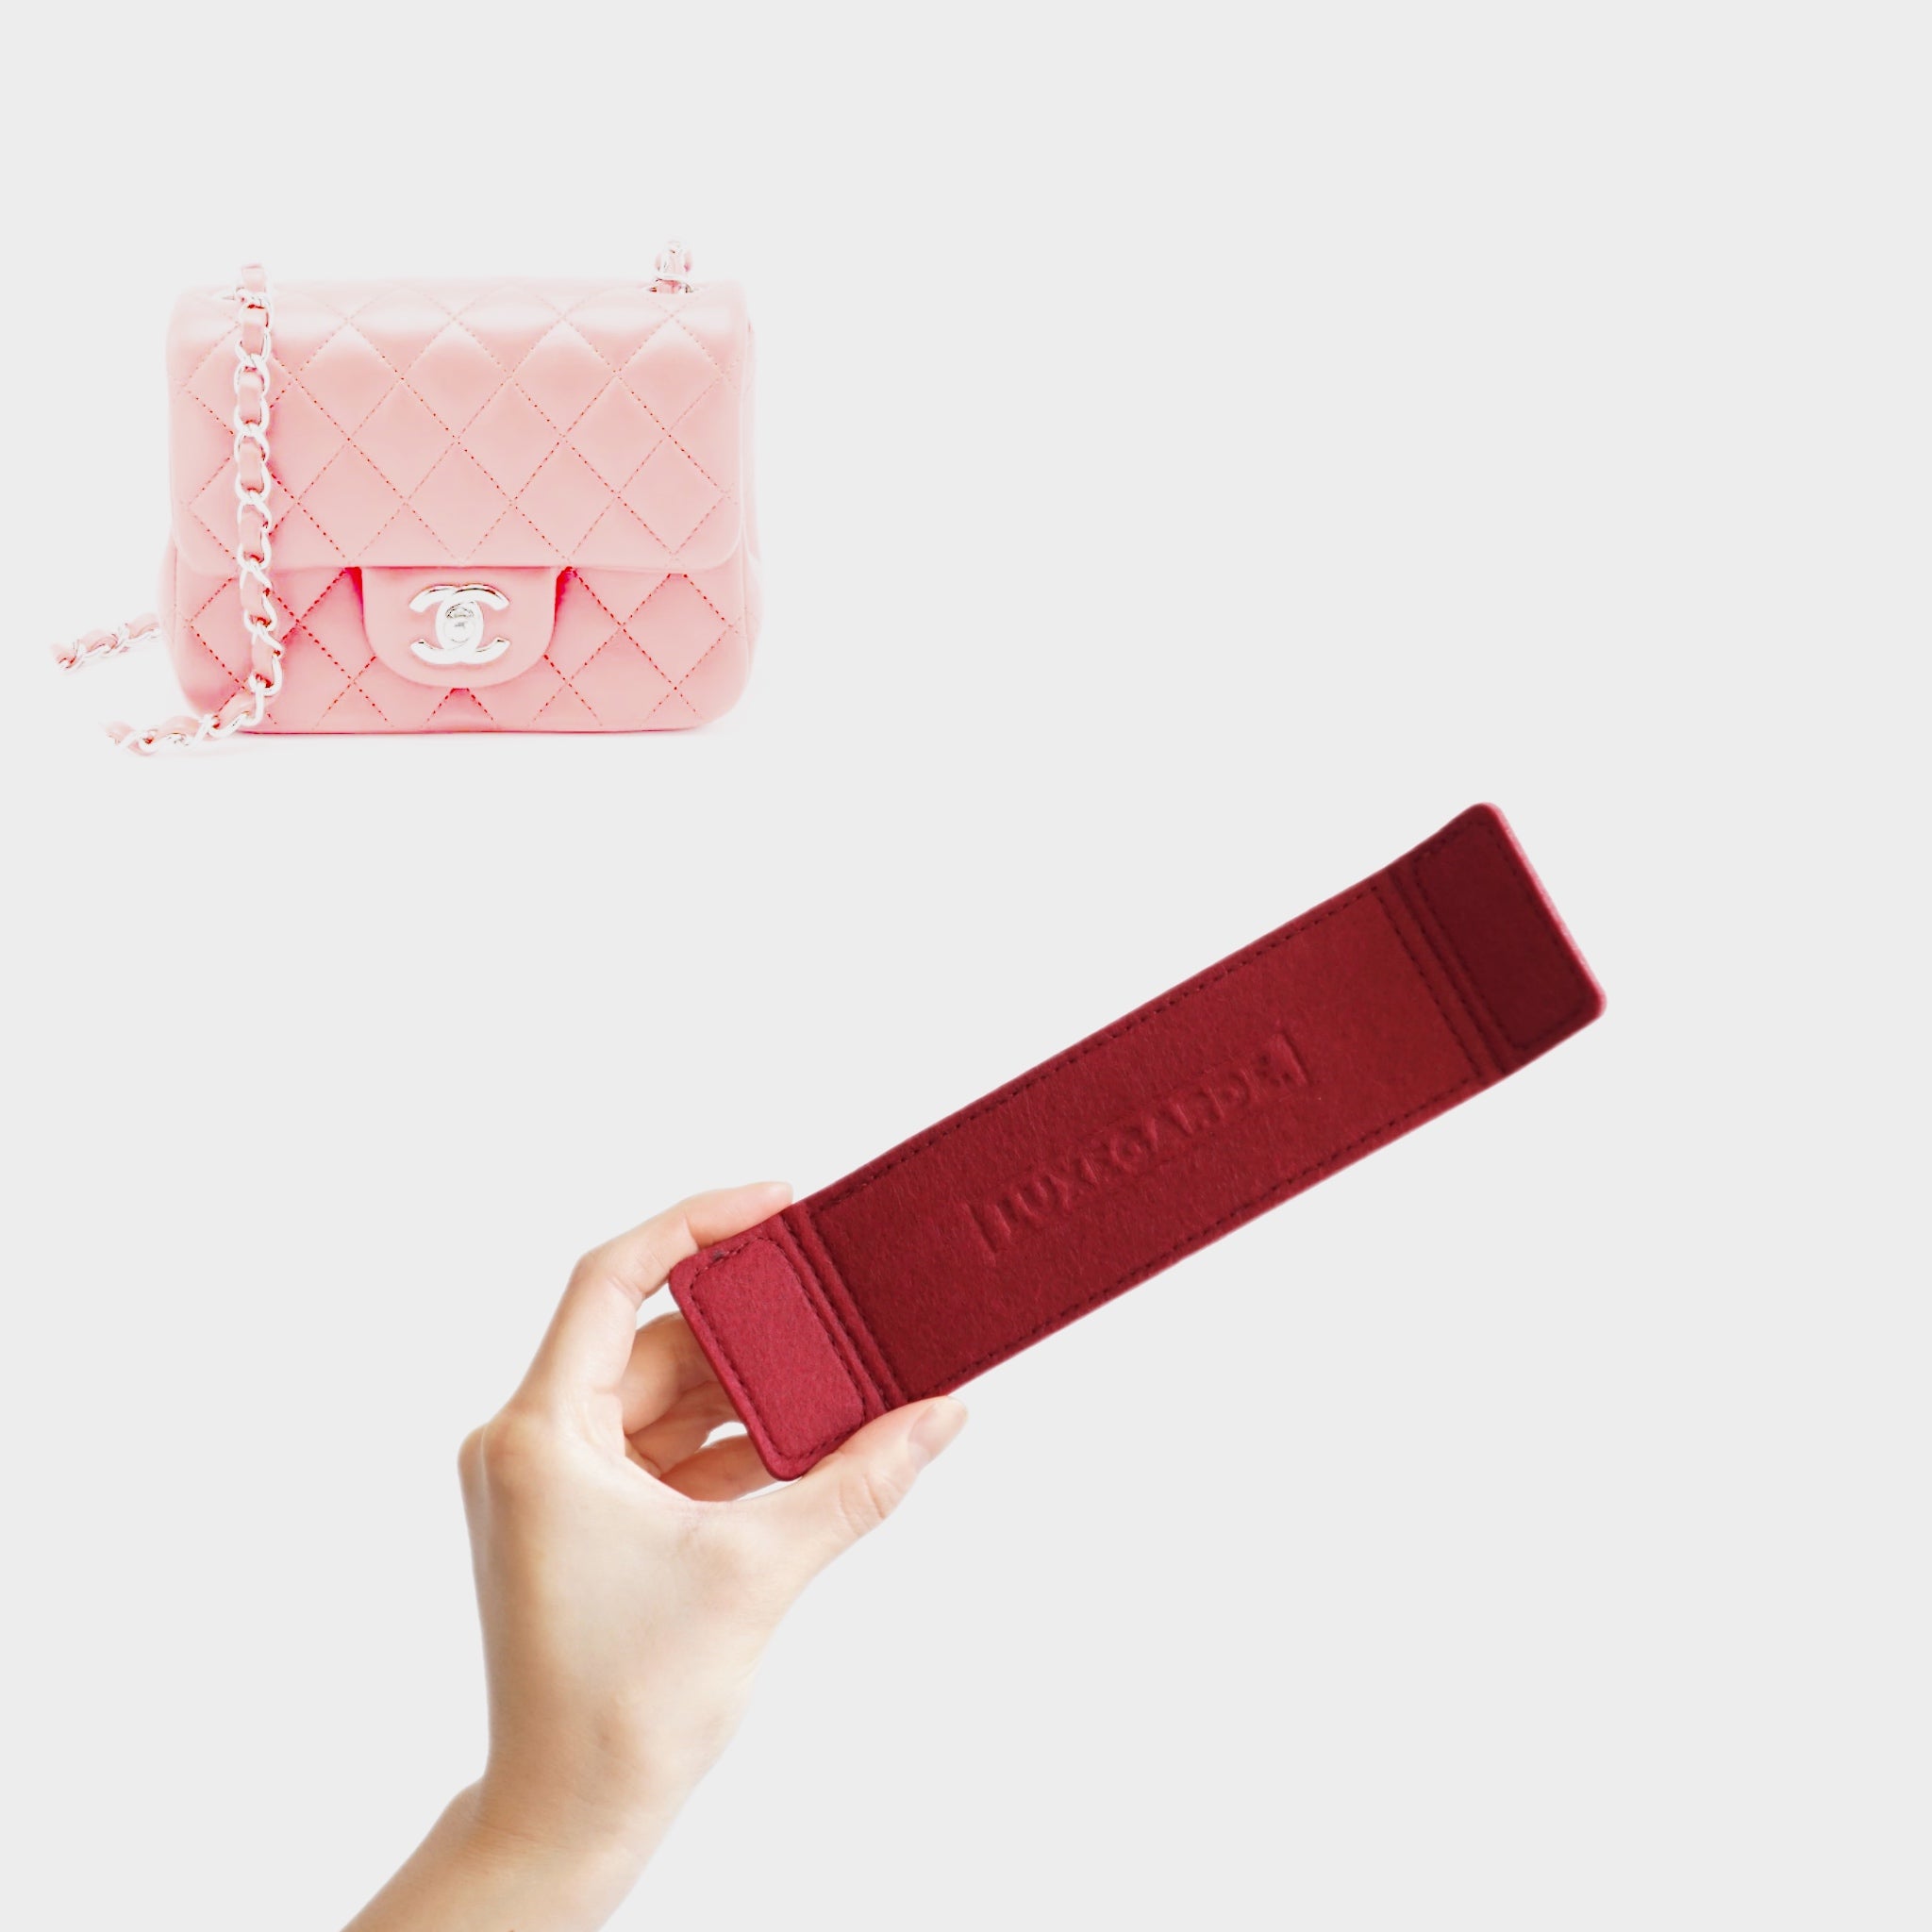 Zoomoni Premium Bag Organizer for Chanel WOC (Wallet on Chain) (Handmade/20  Color Options) [Purse Organiser, Liner, Insert, Shaper]